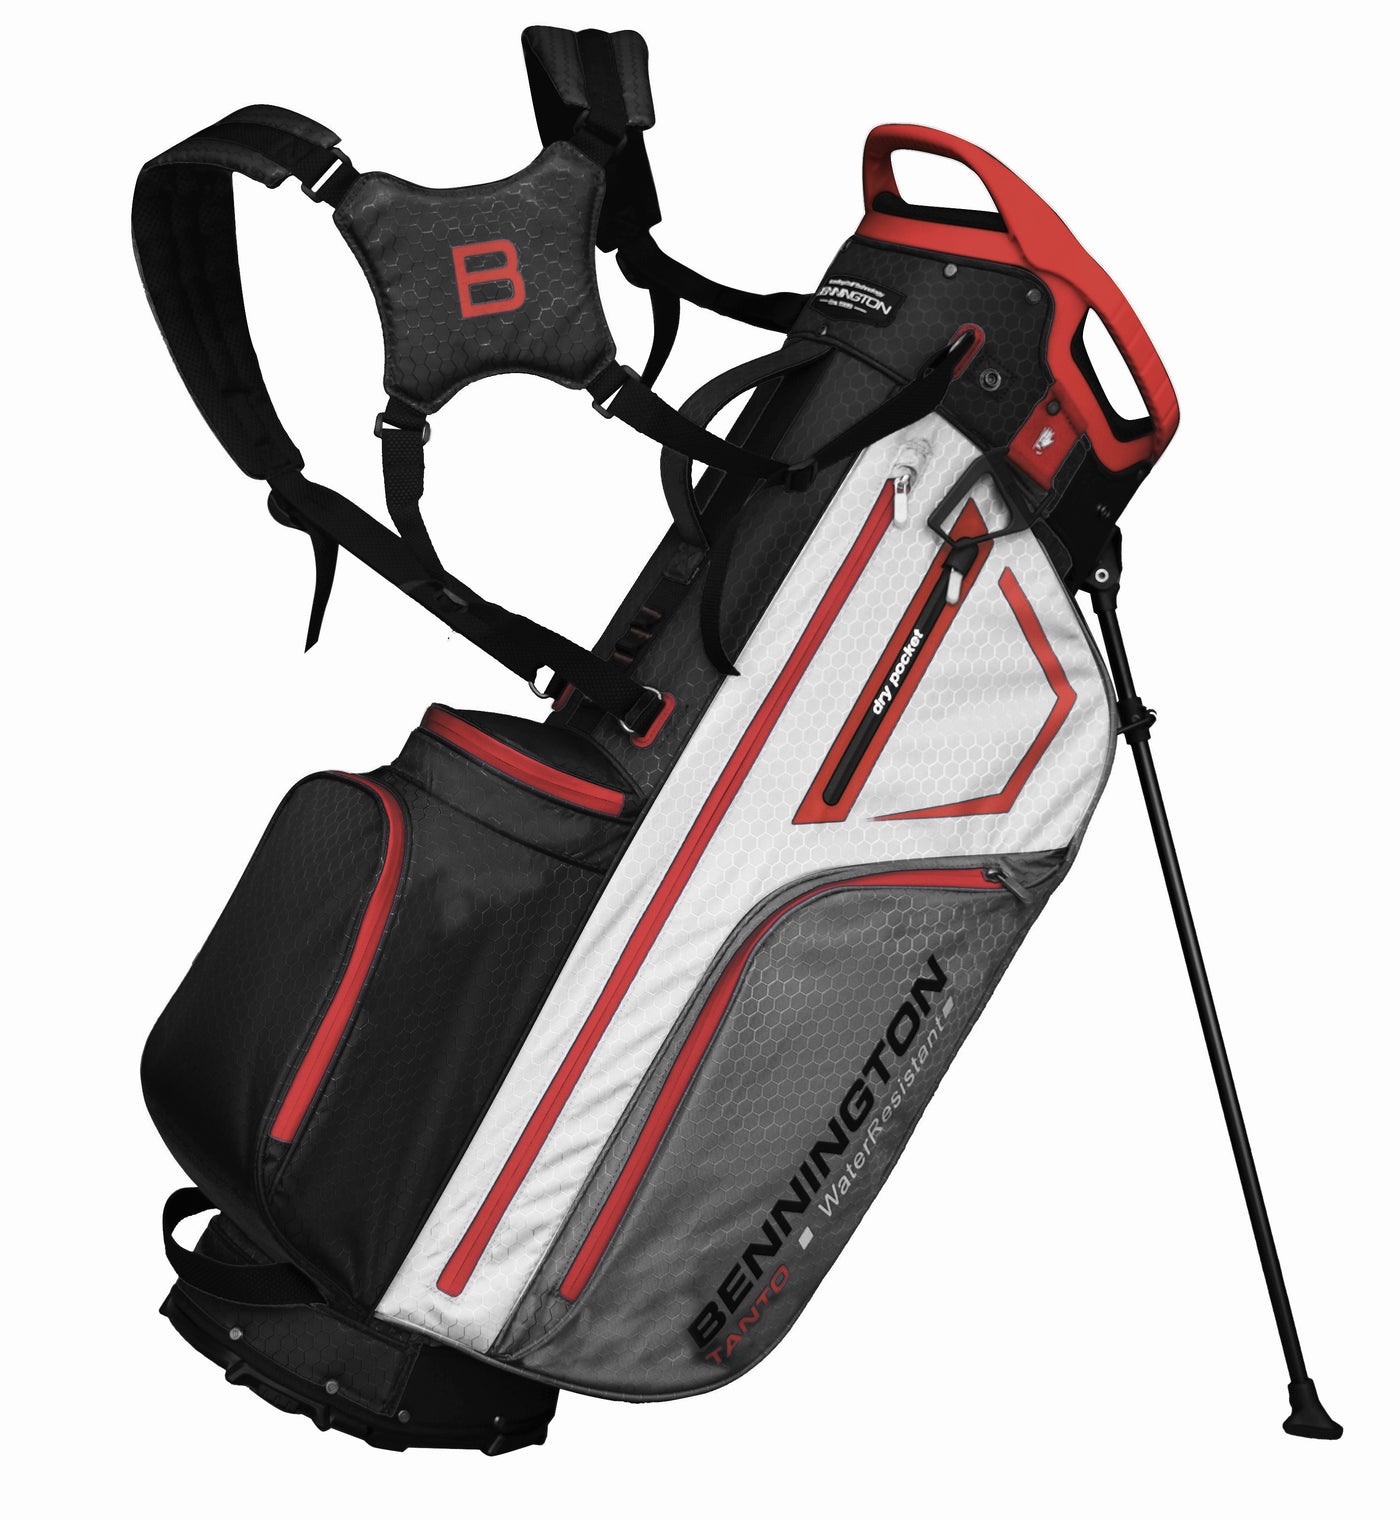 BENNINGTON TANTO 14 Water Resistant golf bag